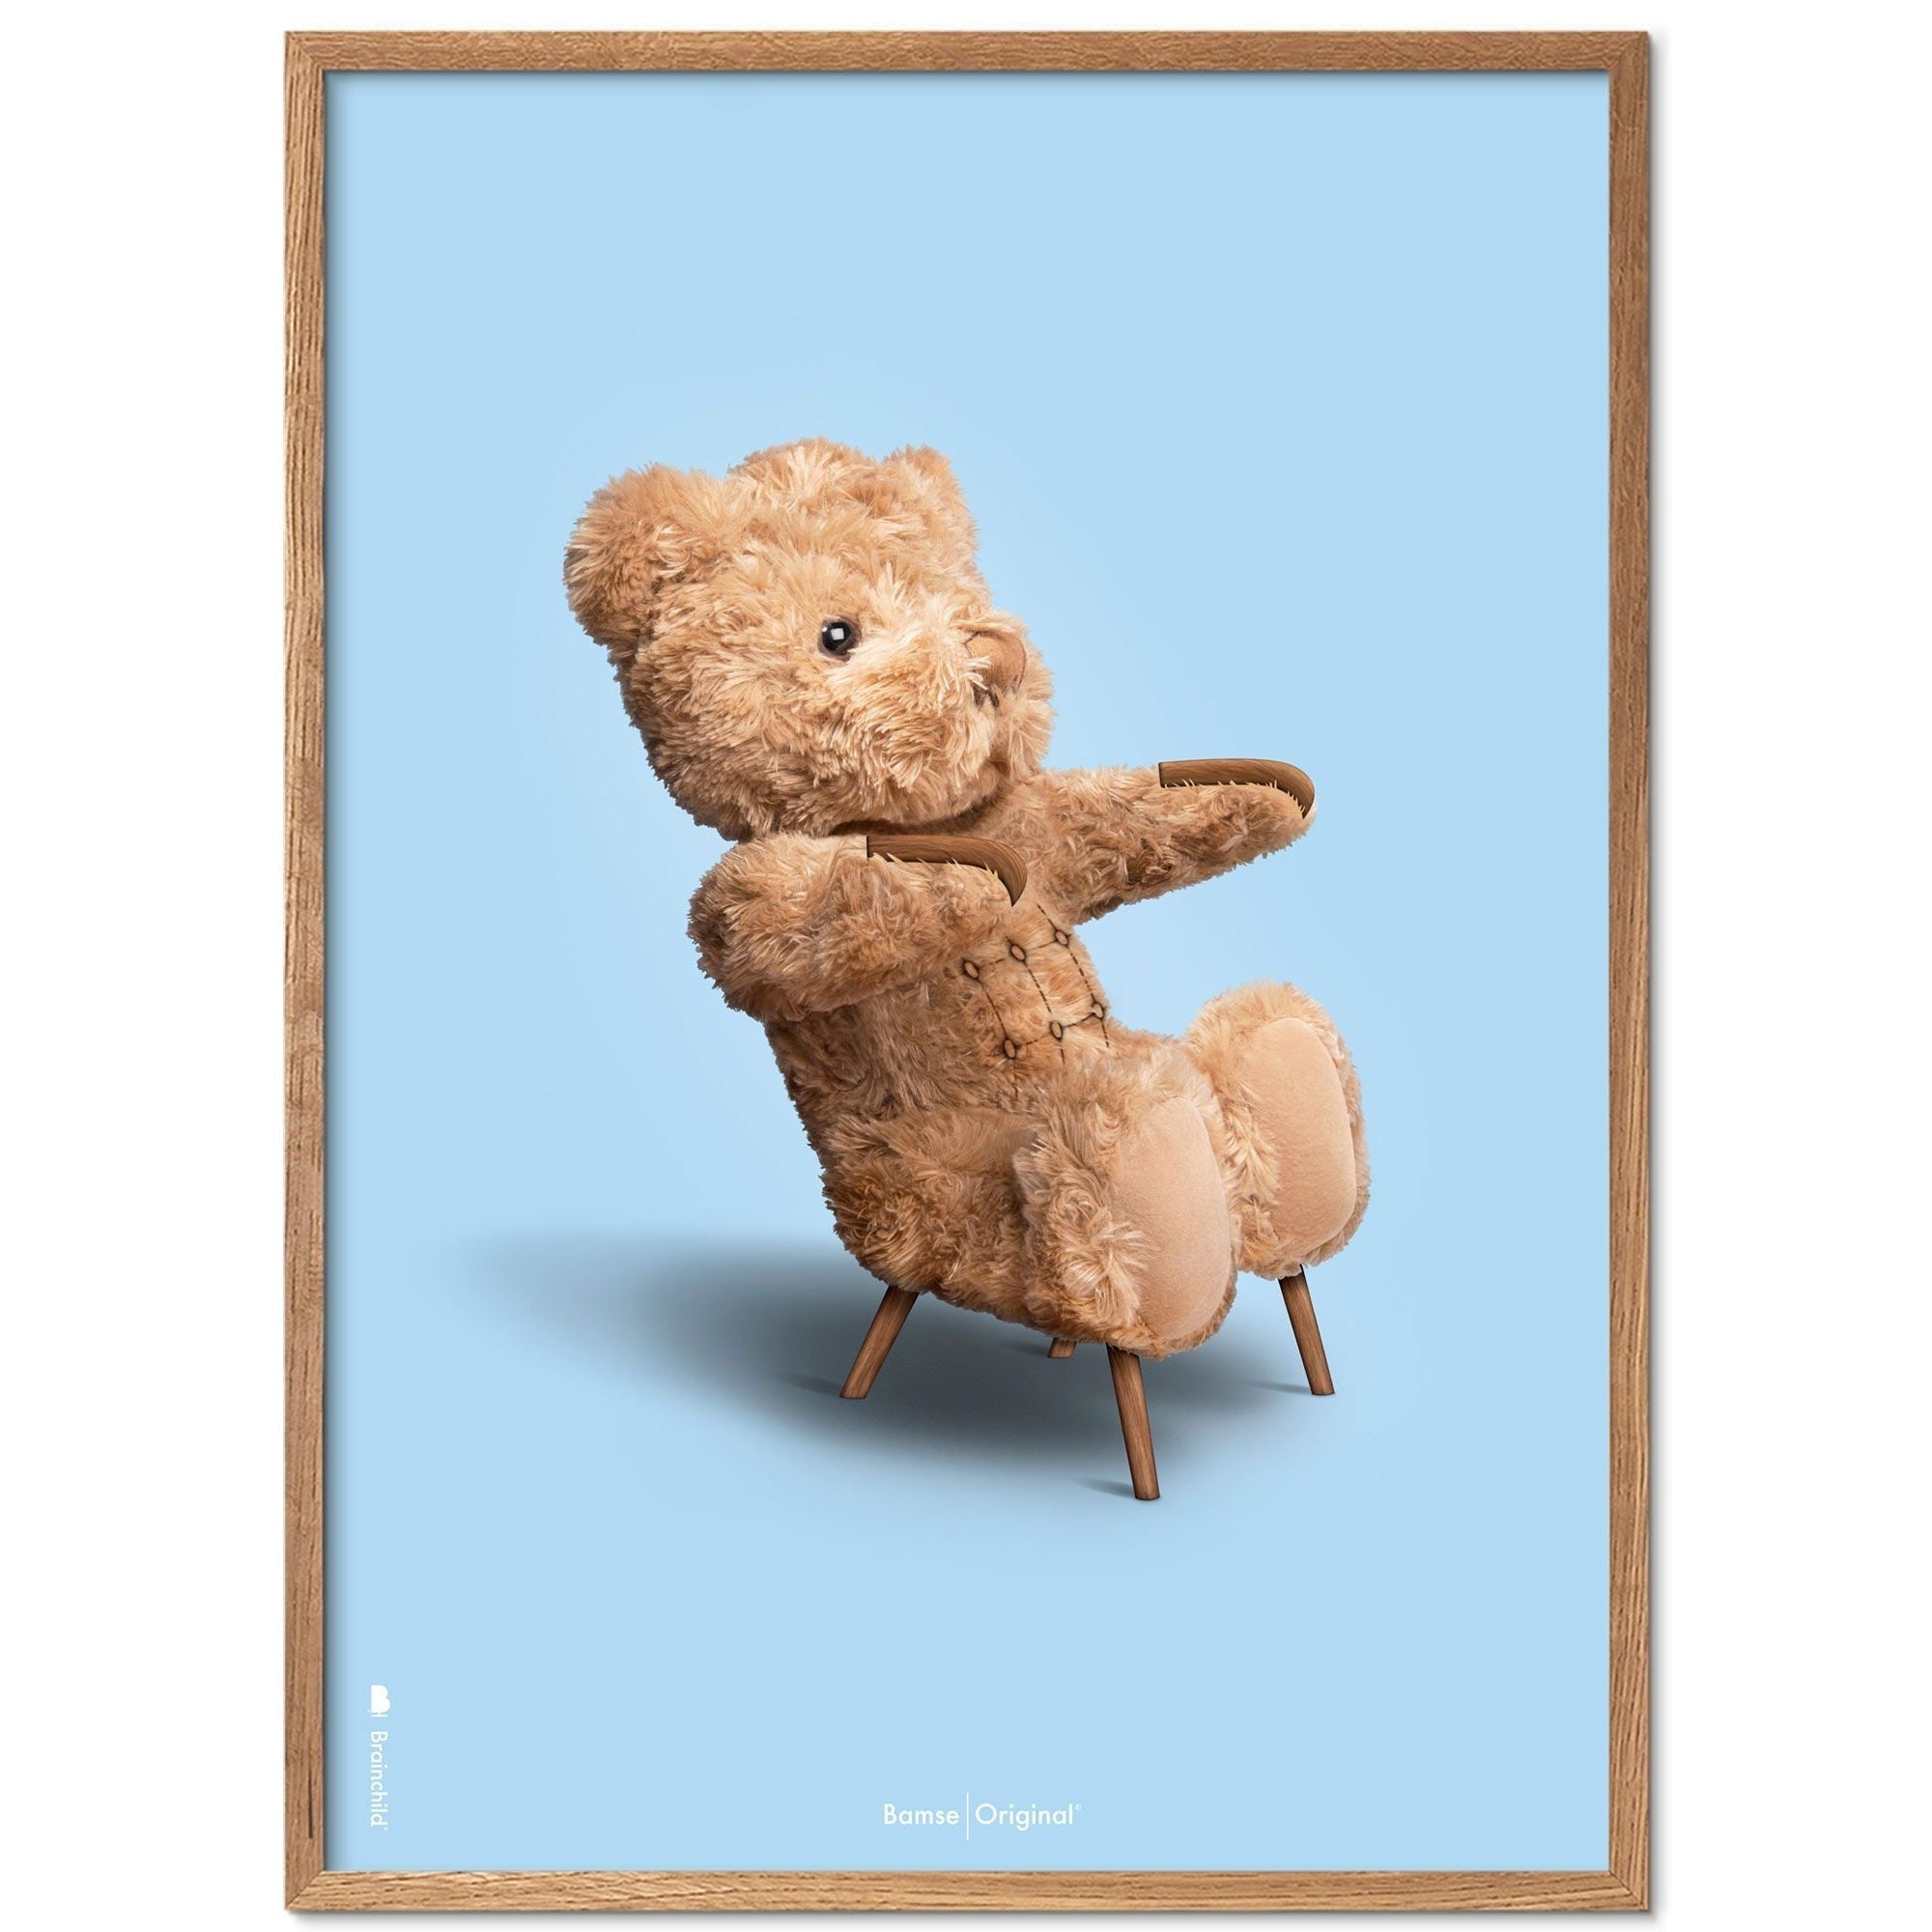 Brainchild Teddy Bear Classic Poster Light Wood Frame Ramme A5, Light Blue Background